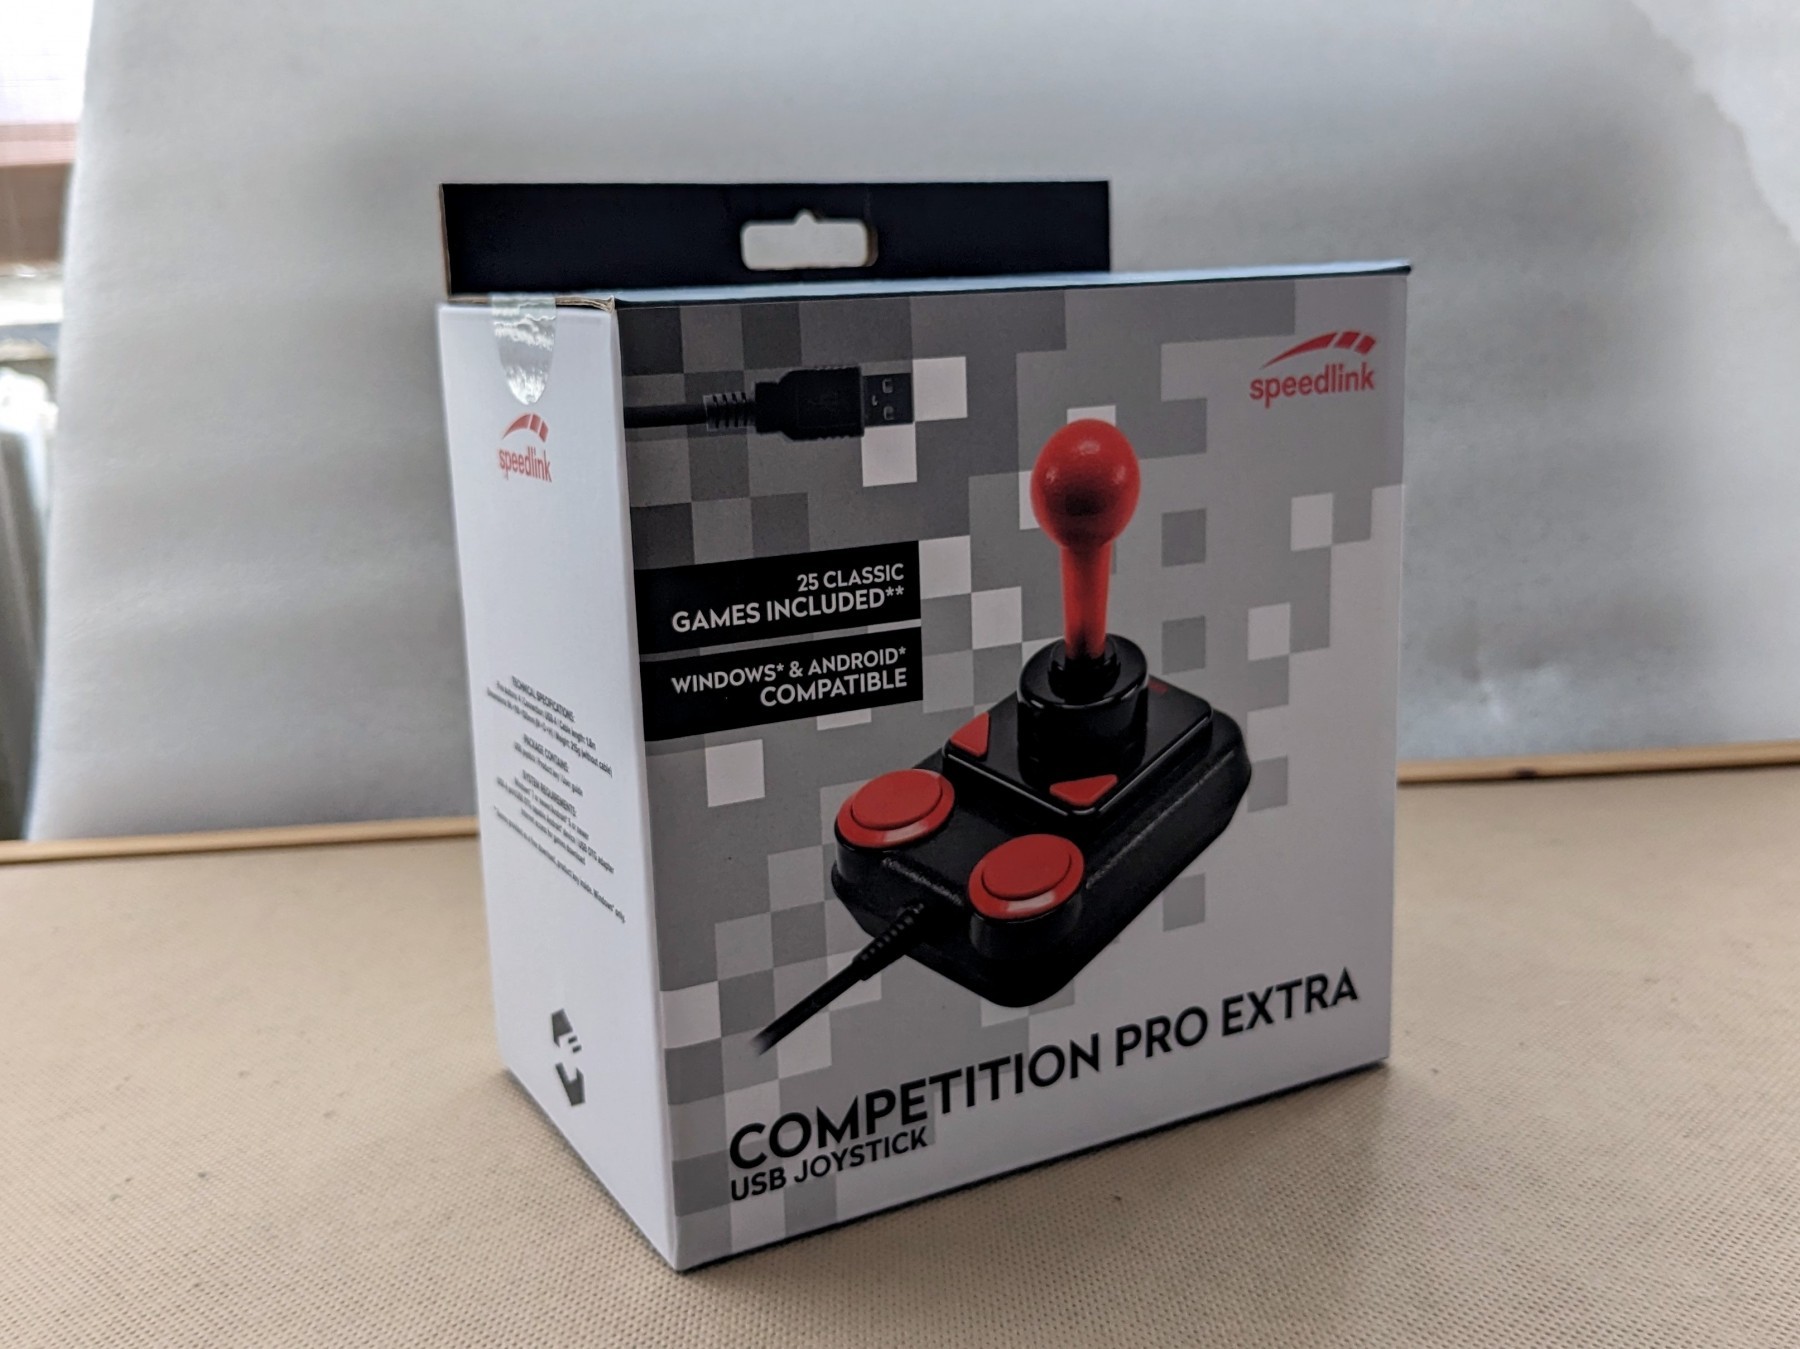 Speedlink Competition Pro extra USB joystick - Kupindo.com (74757149)